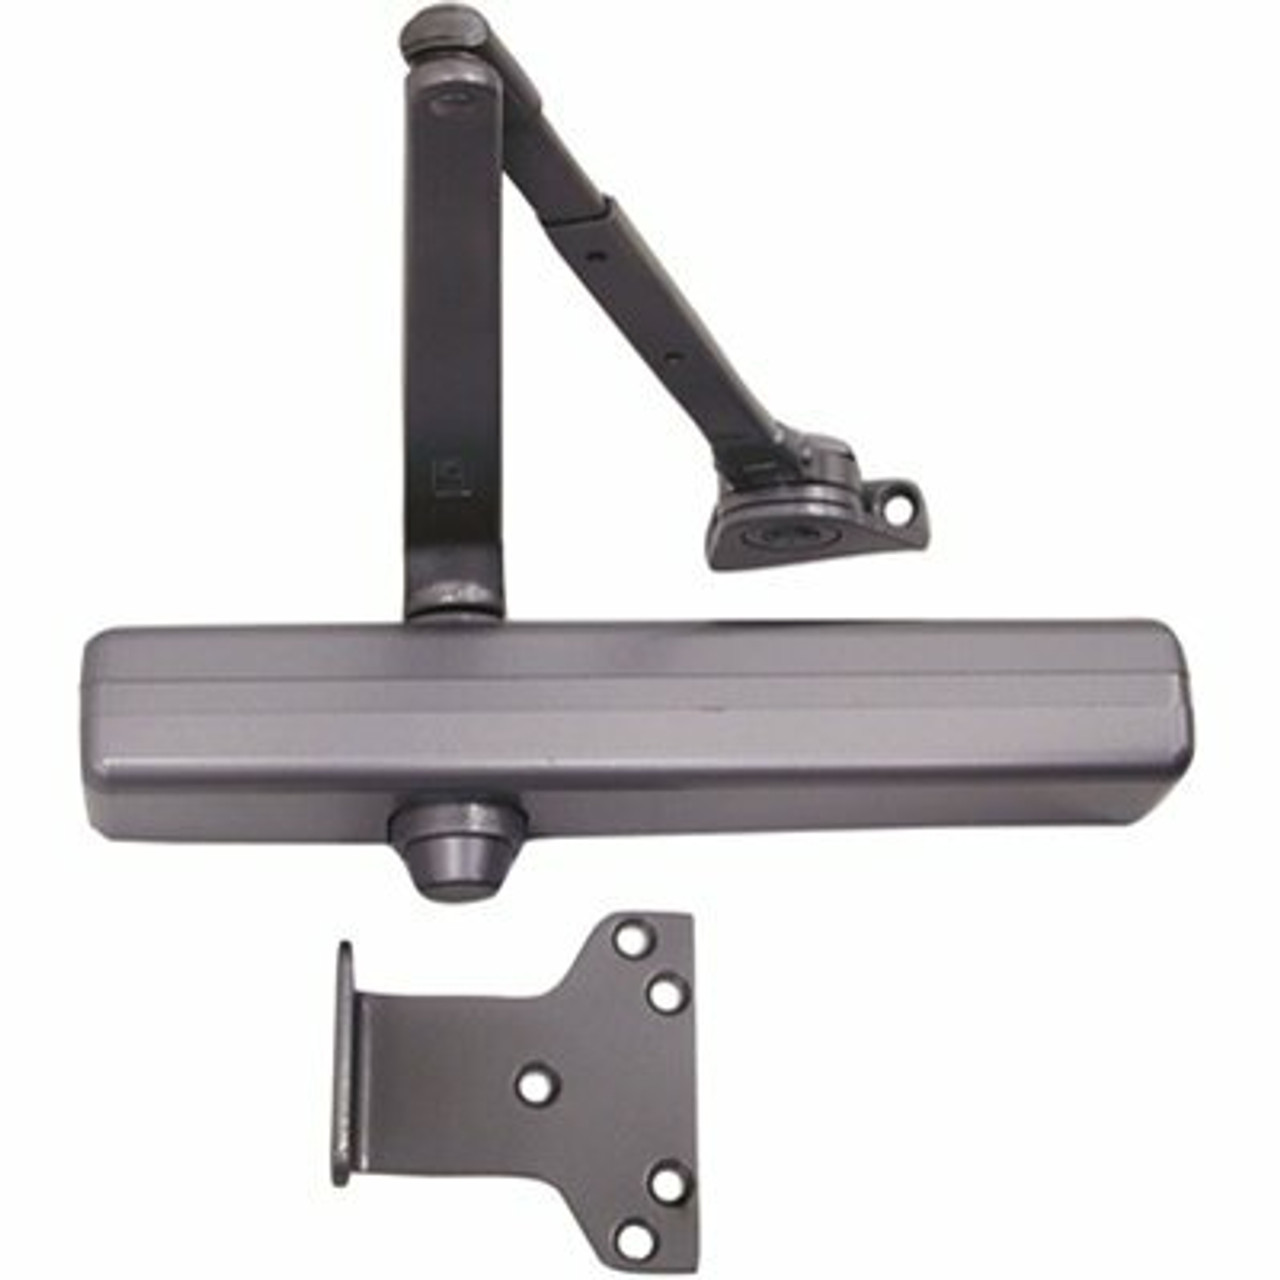 Lcn Sized 1-6 Aluminum/689 Finish Hold-Open Arm Surface Door Closer (30-Year Warranty)